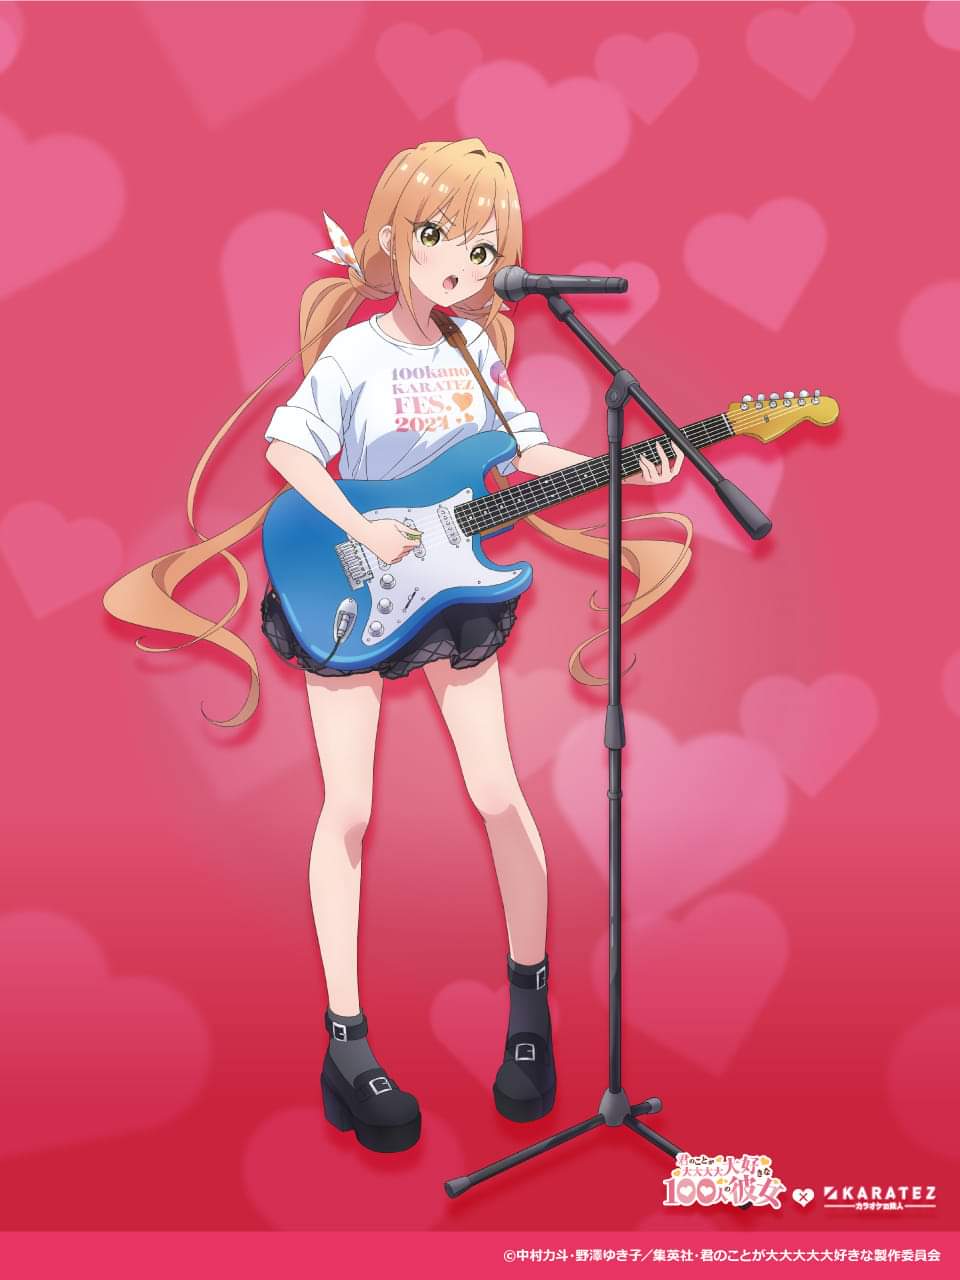 100 GFs x Karaoke No Tetsujin special collab visual featuring everyone's favorite tsundere, the adorable Karane Inda